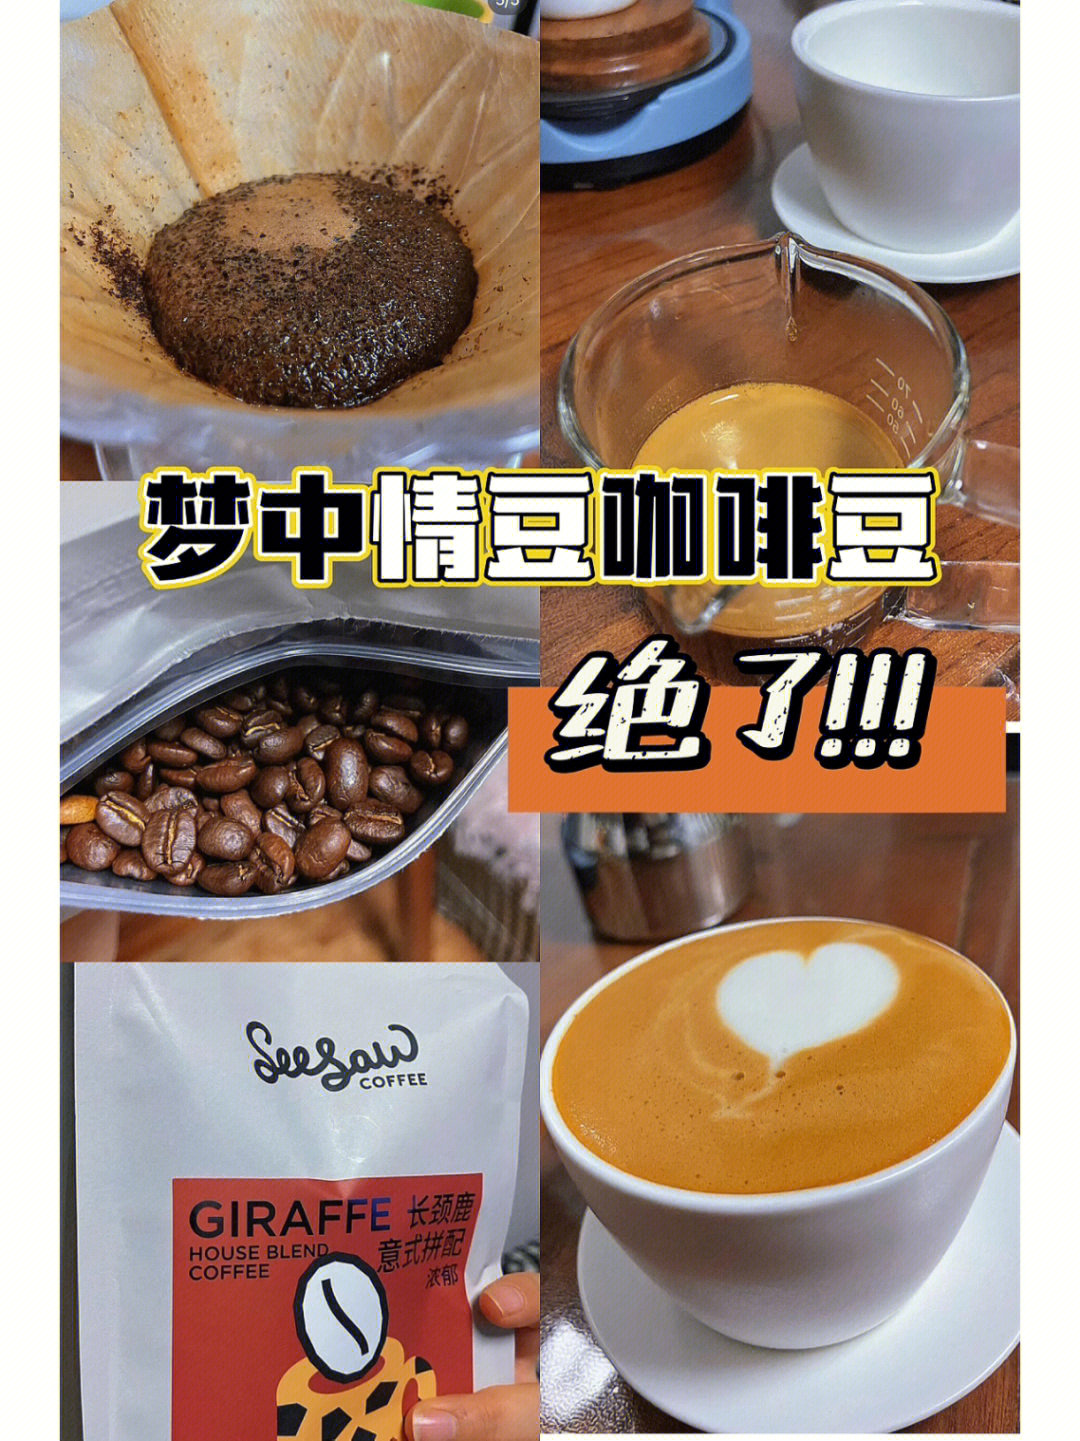 seesaw咖啡菜单图片